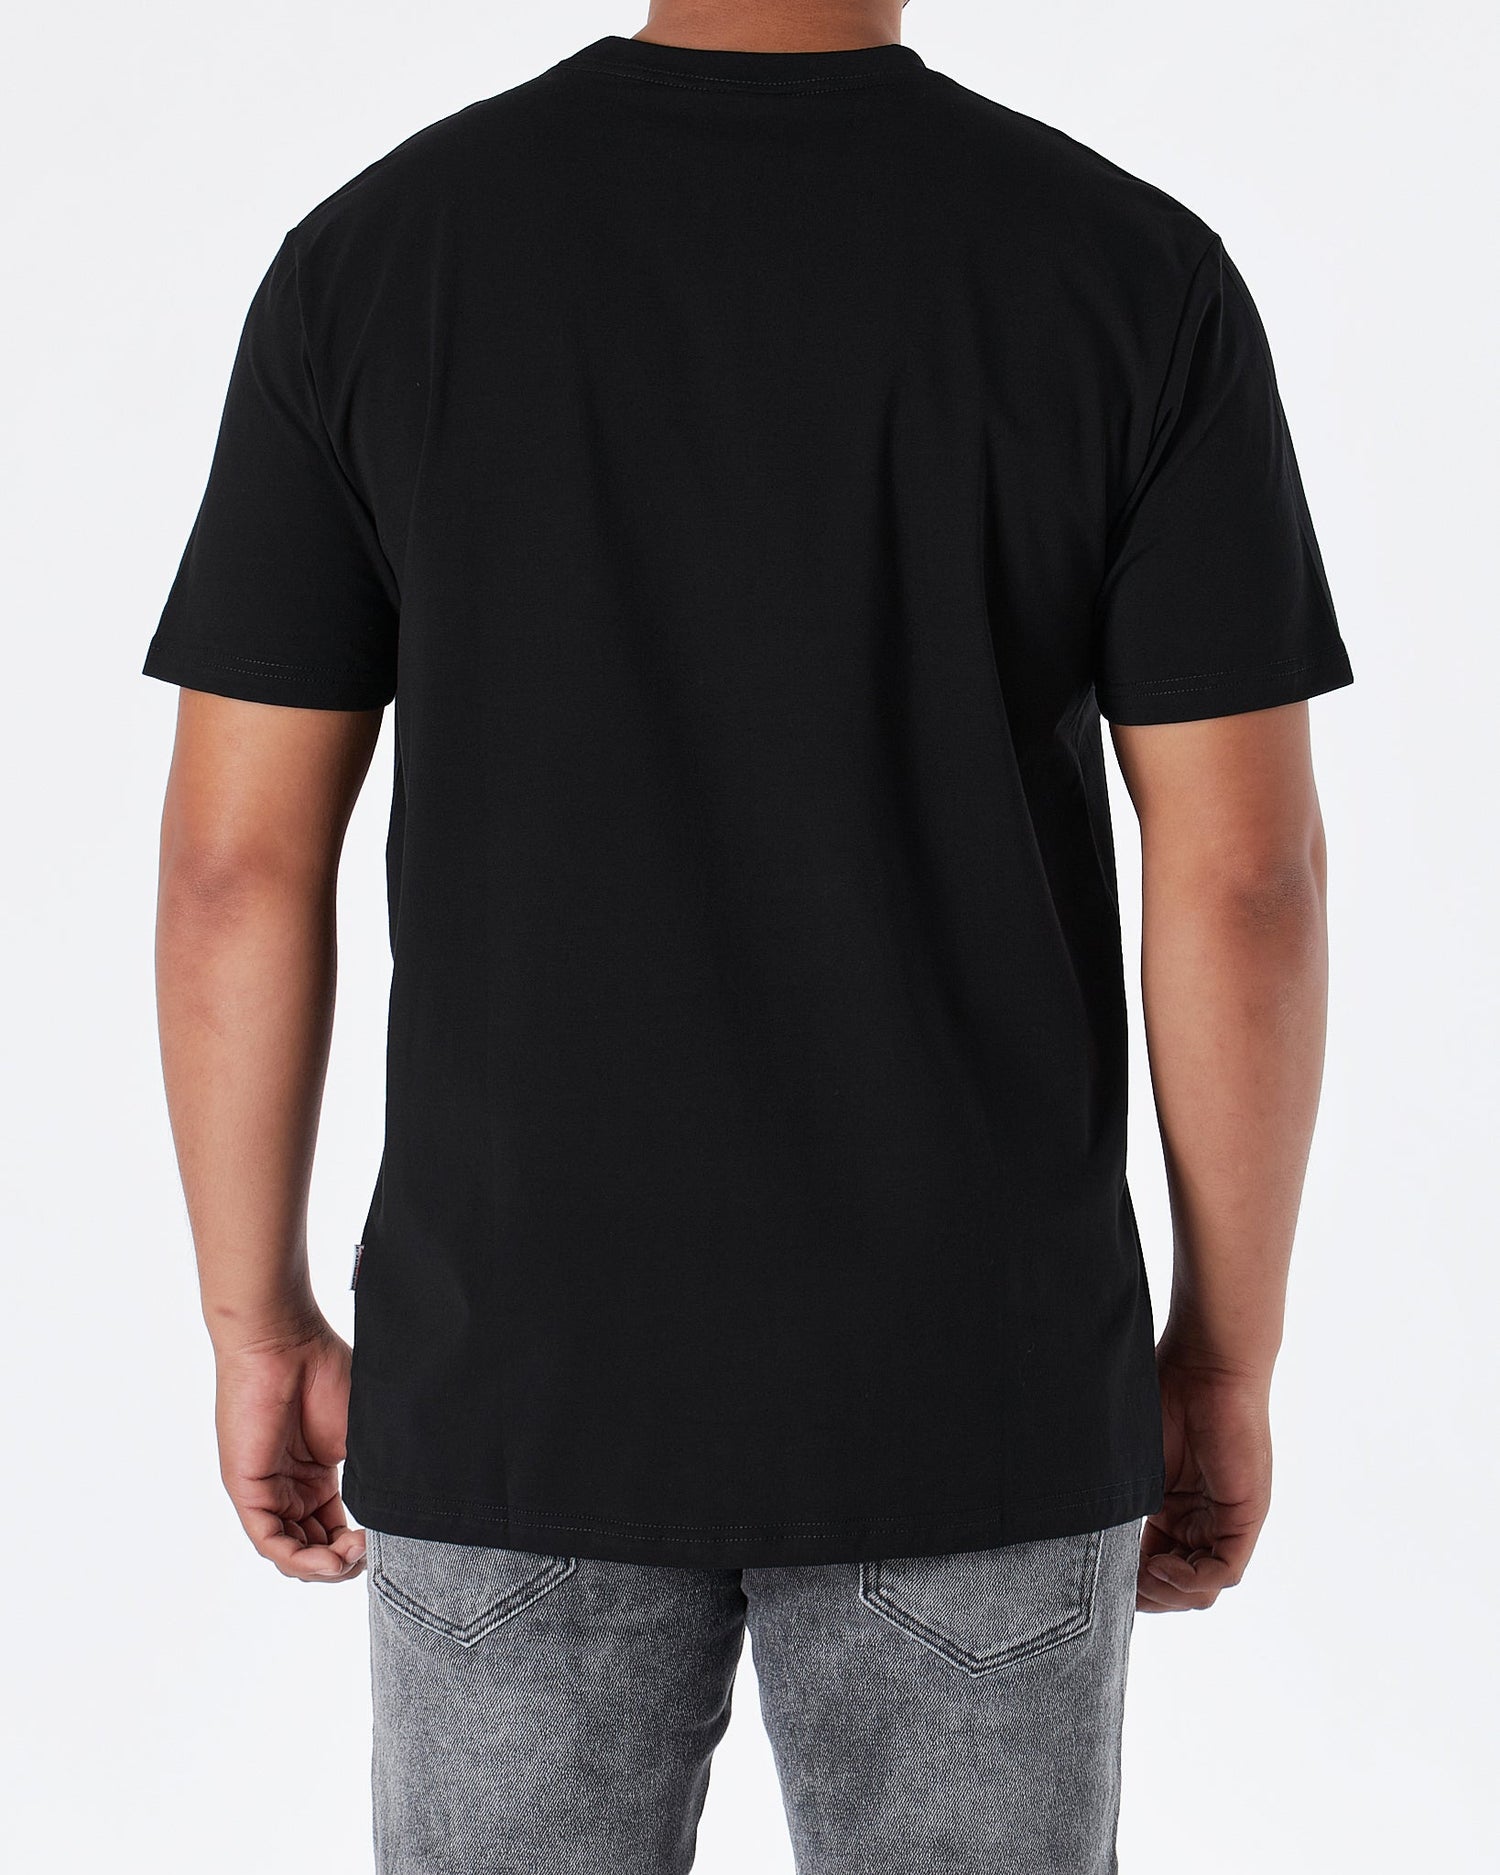 MOI OUTFIT-Gorilla Face Printed Men T-Shirt 14.90